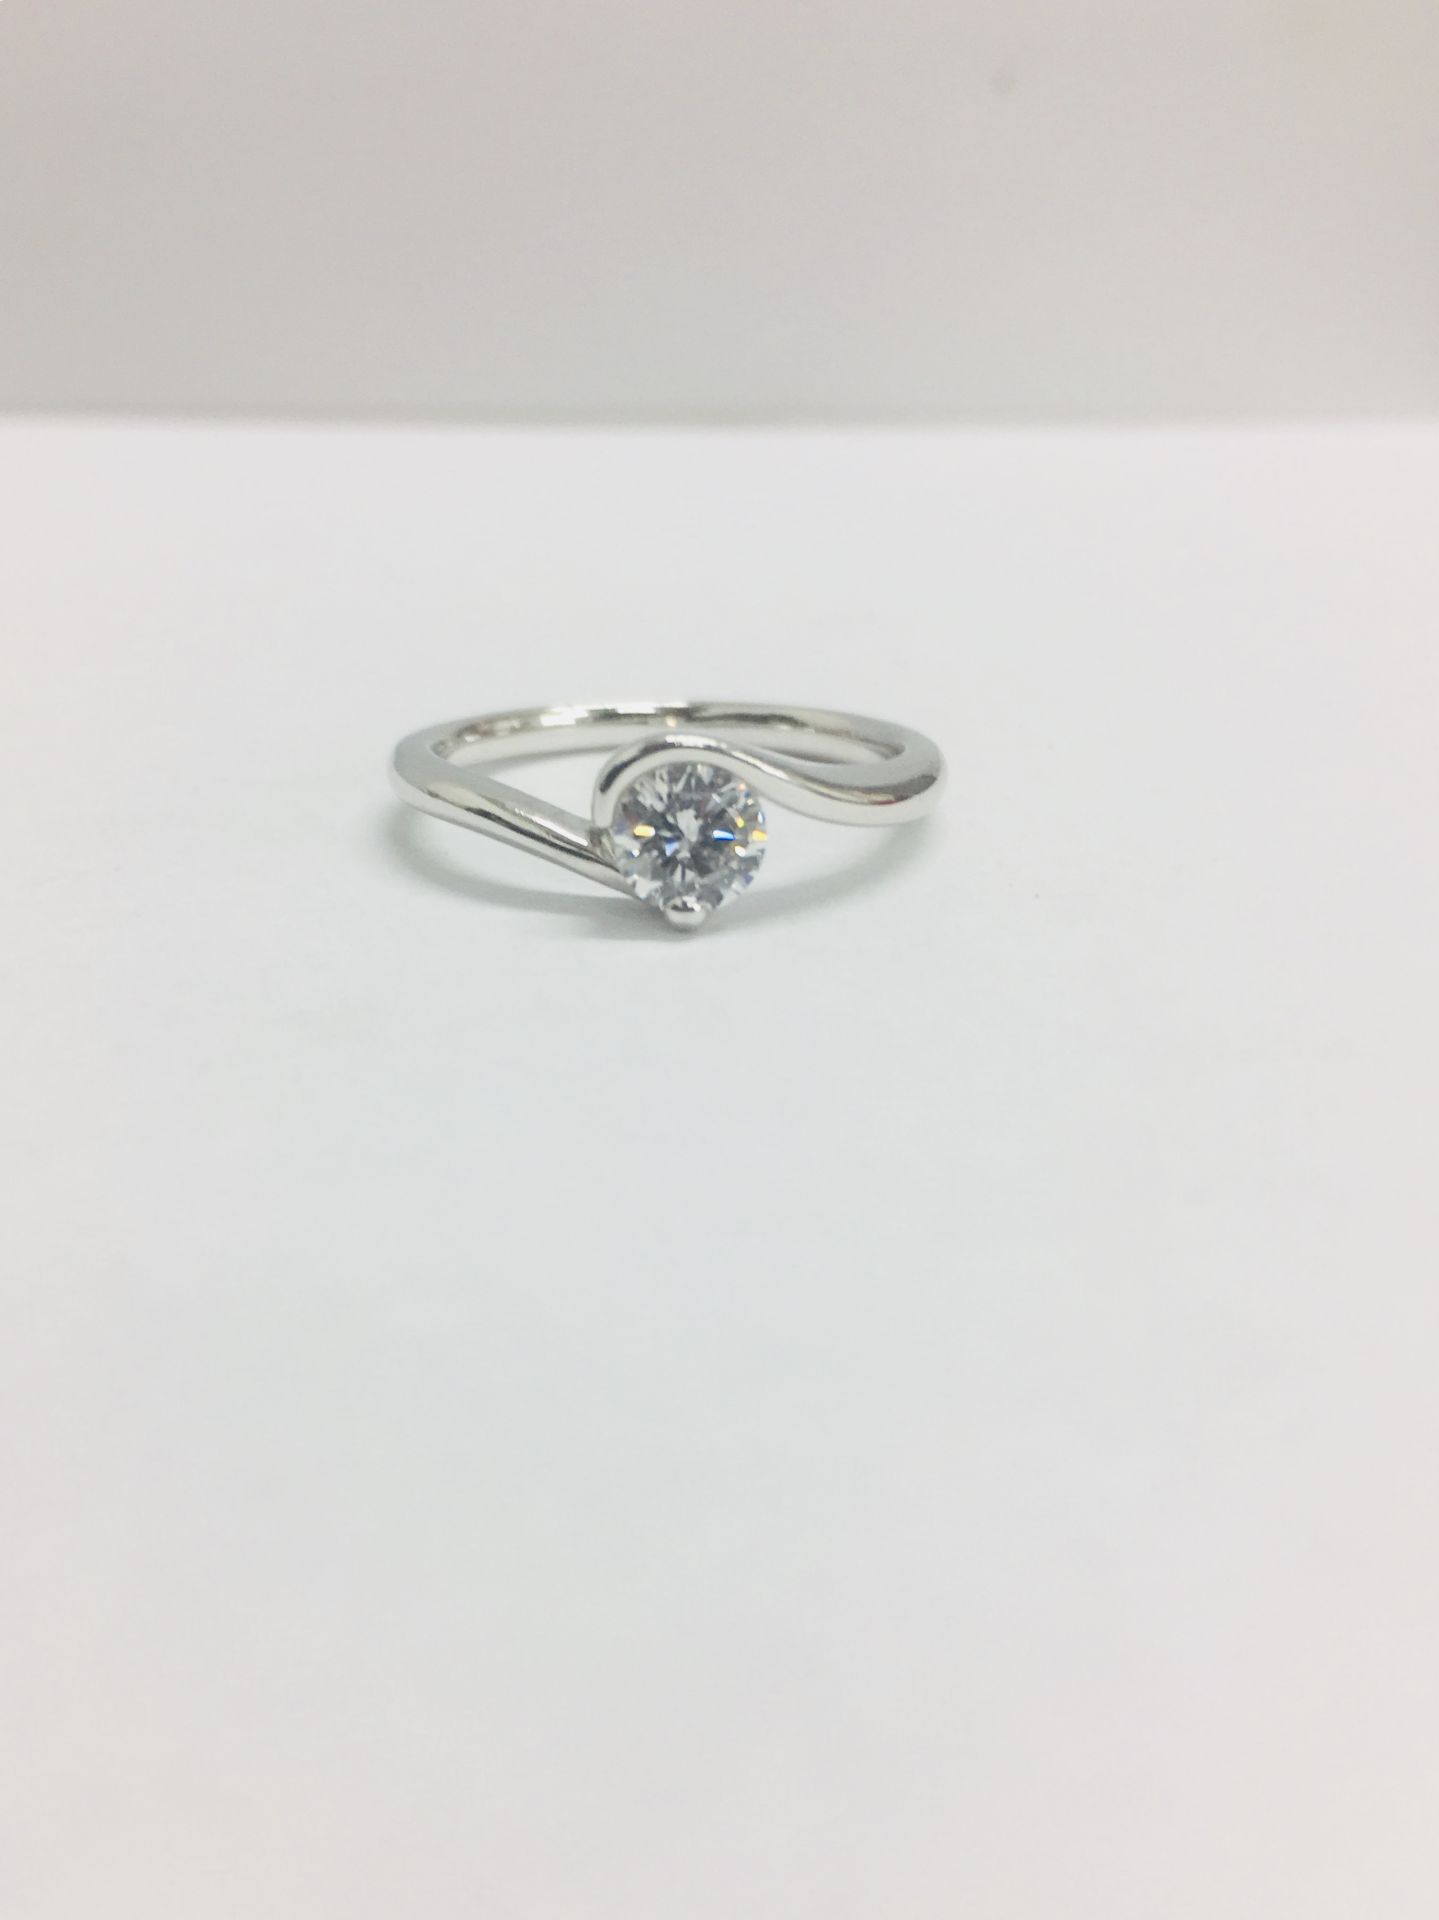 Platinum twist style diamond solitaire ring,0.50ct D colour vs clarity diamond,4.68gms platinum,uk - Image 2 of 7